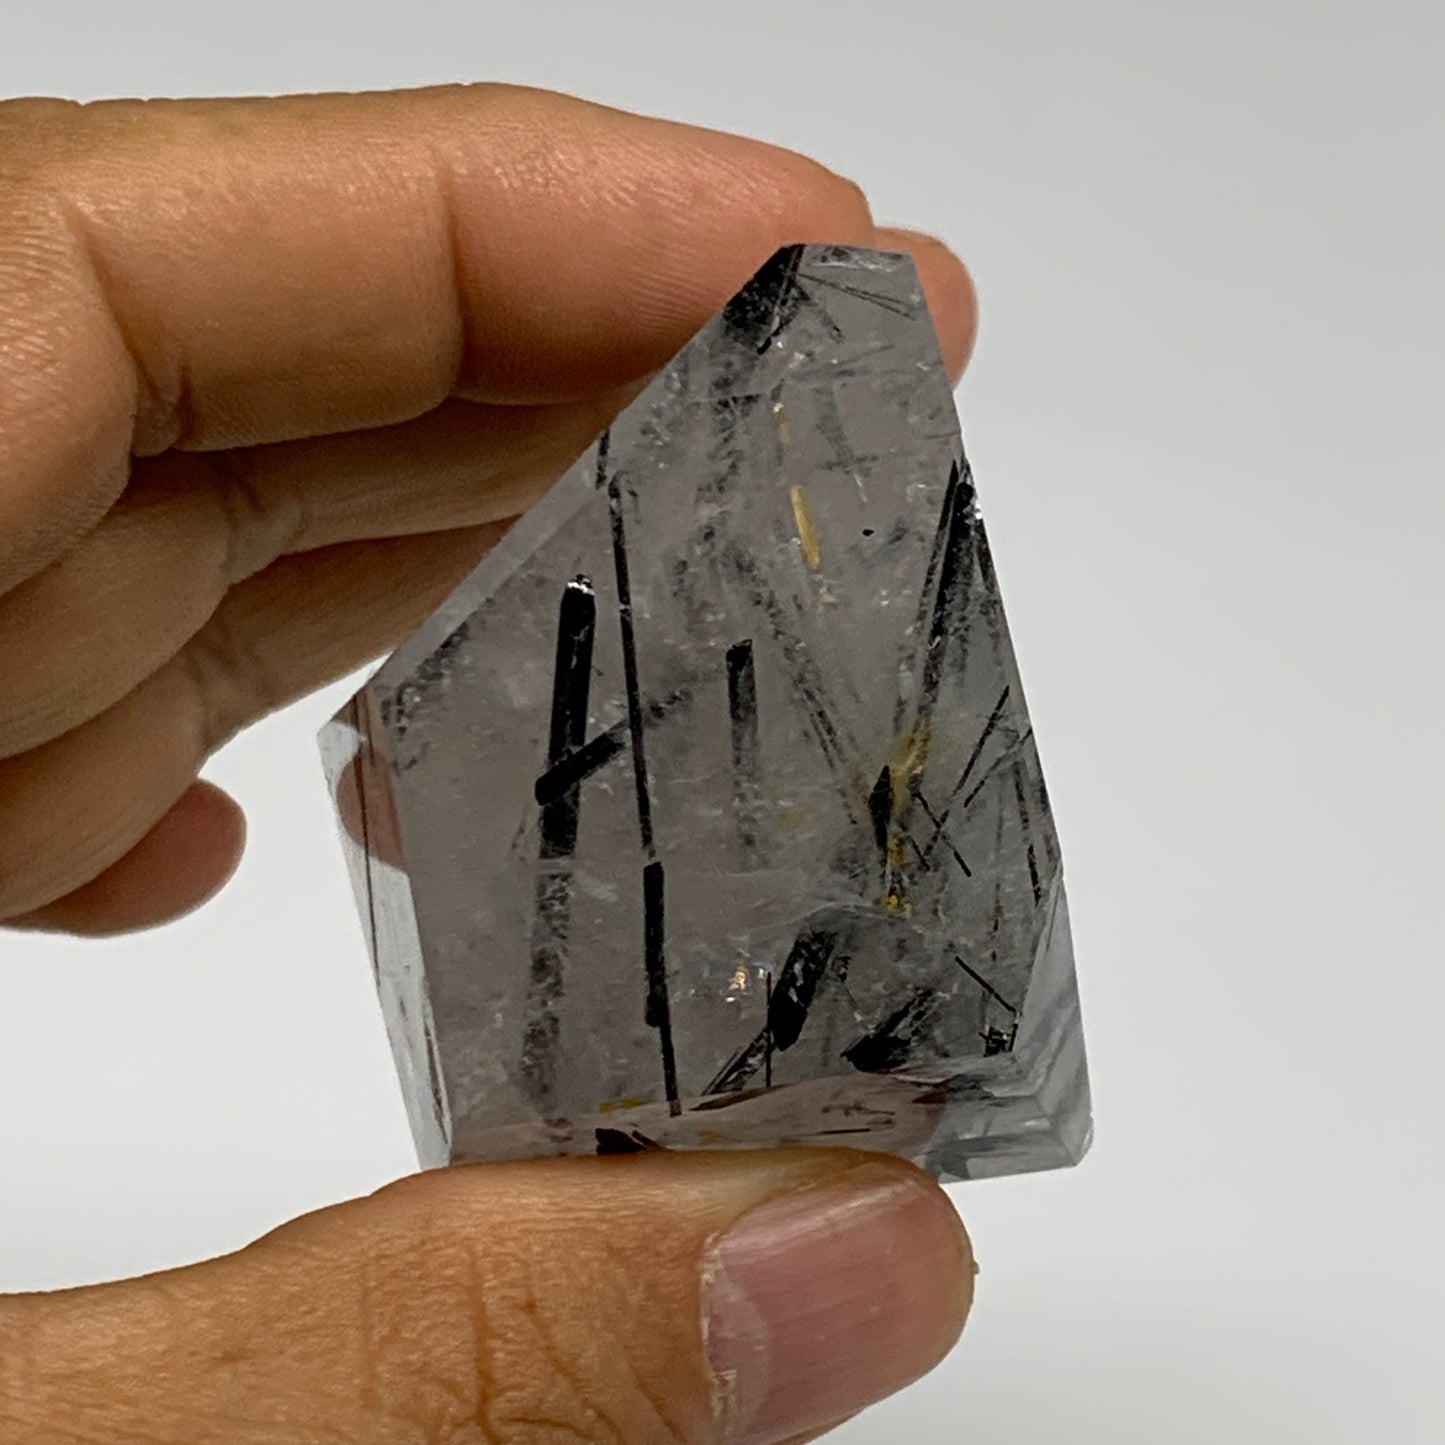 96.8g, 1.8"x1.9"x1.3", Black Tourmaline Rutile Quartz Crystal Chunk @Brazil,B274